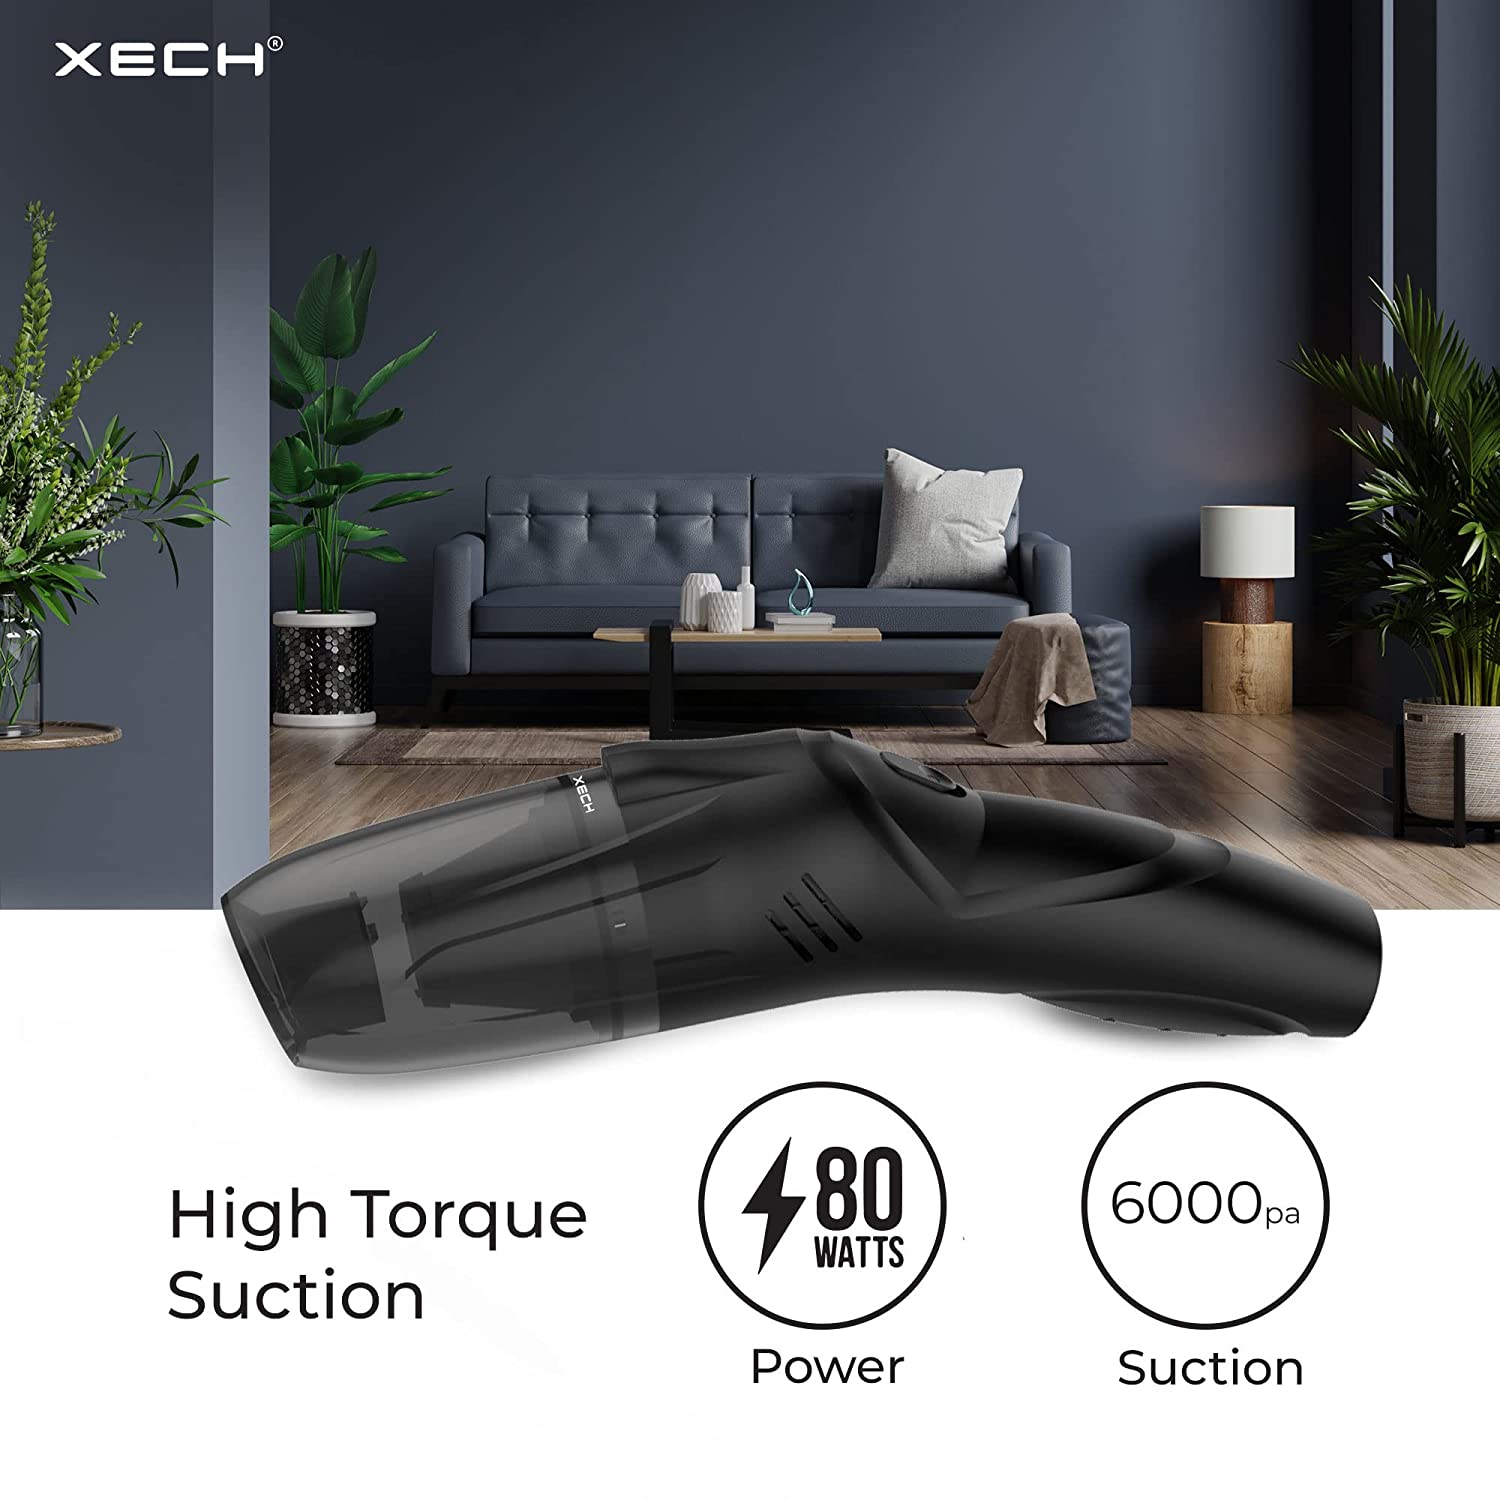 XECH - V-SHARK - Cordless Rechargeable Handheld Vacuum Cleaner